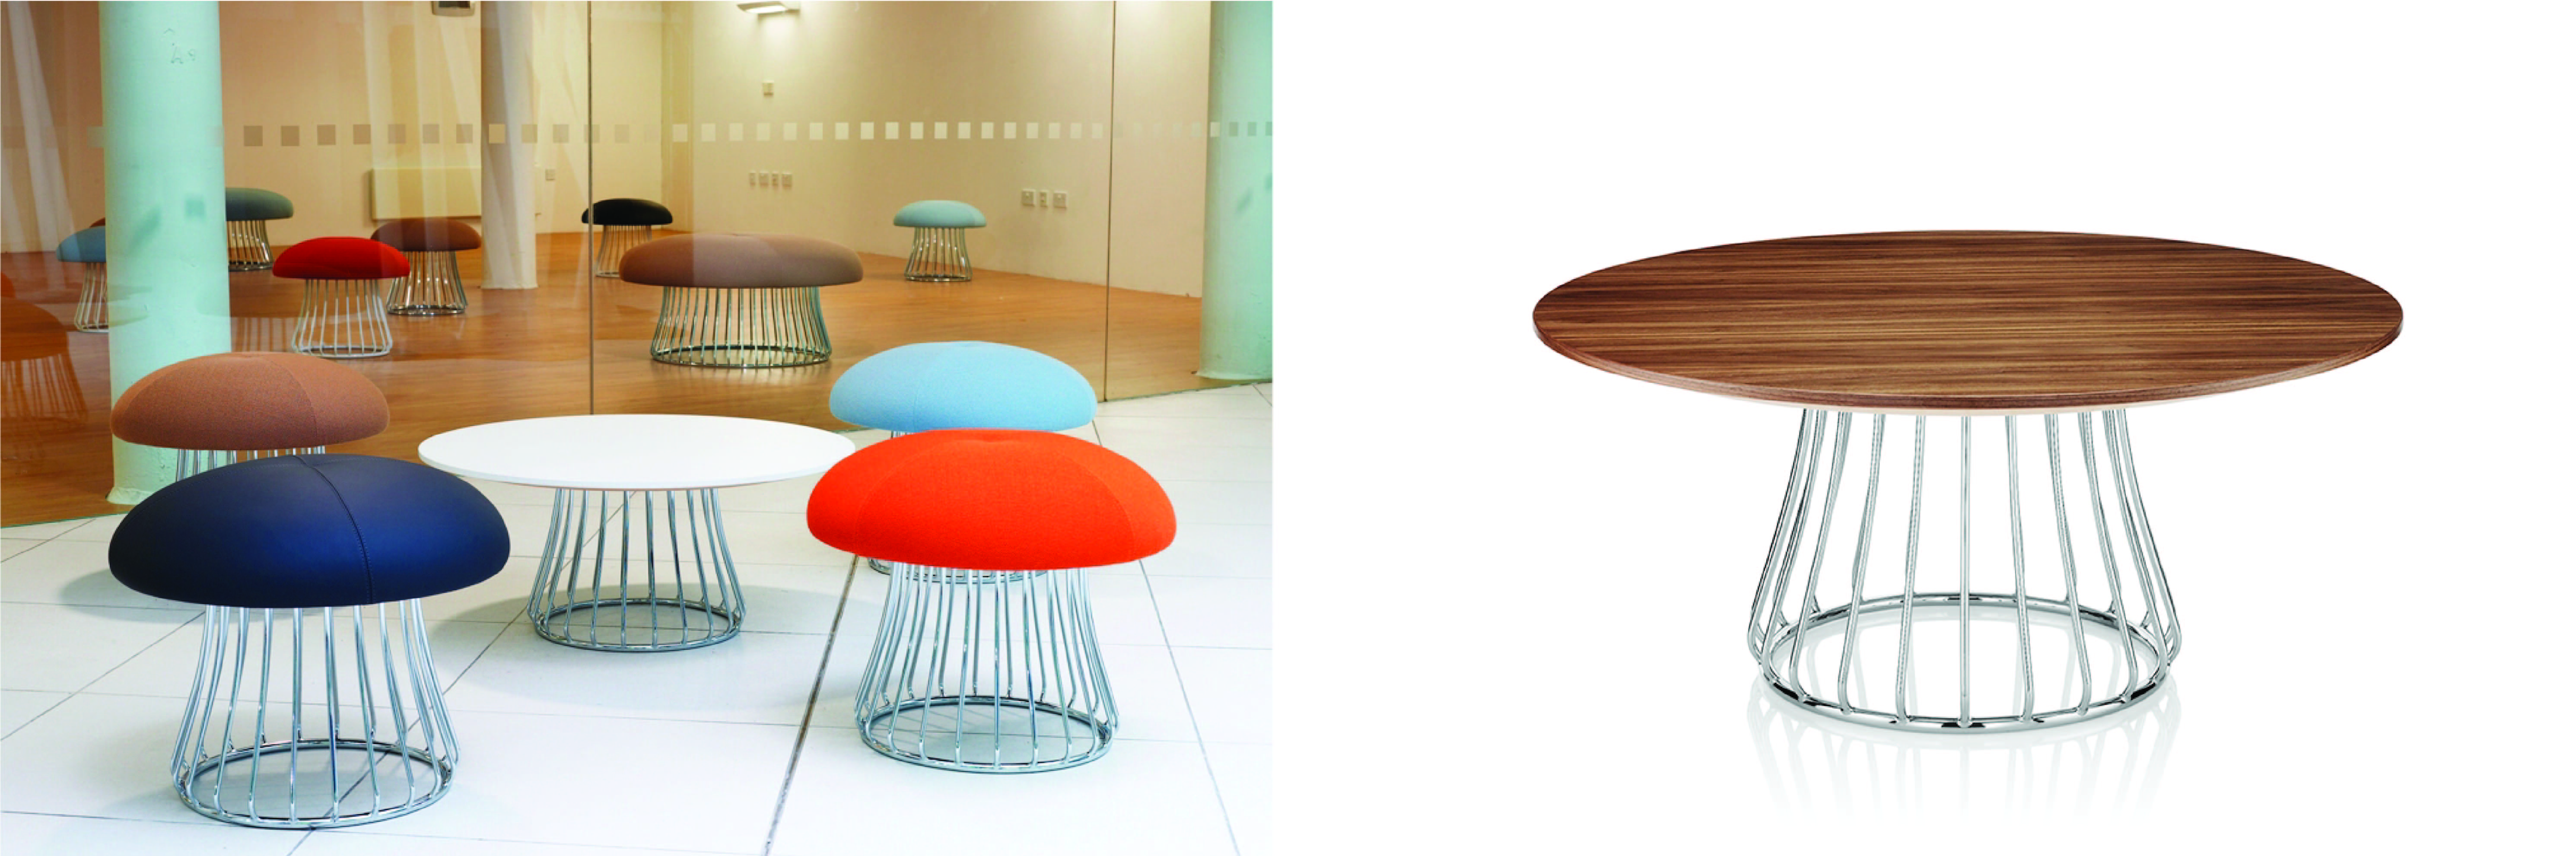 Ancillary Furniture - Magic Stool by Boss Design